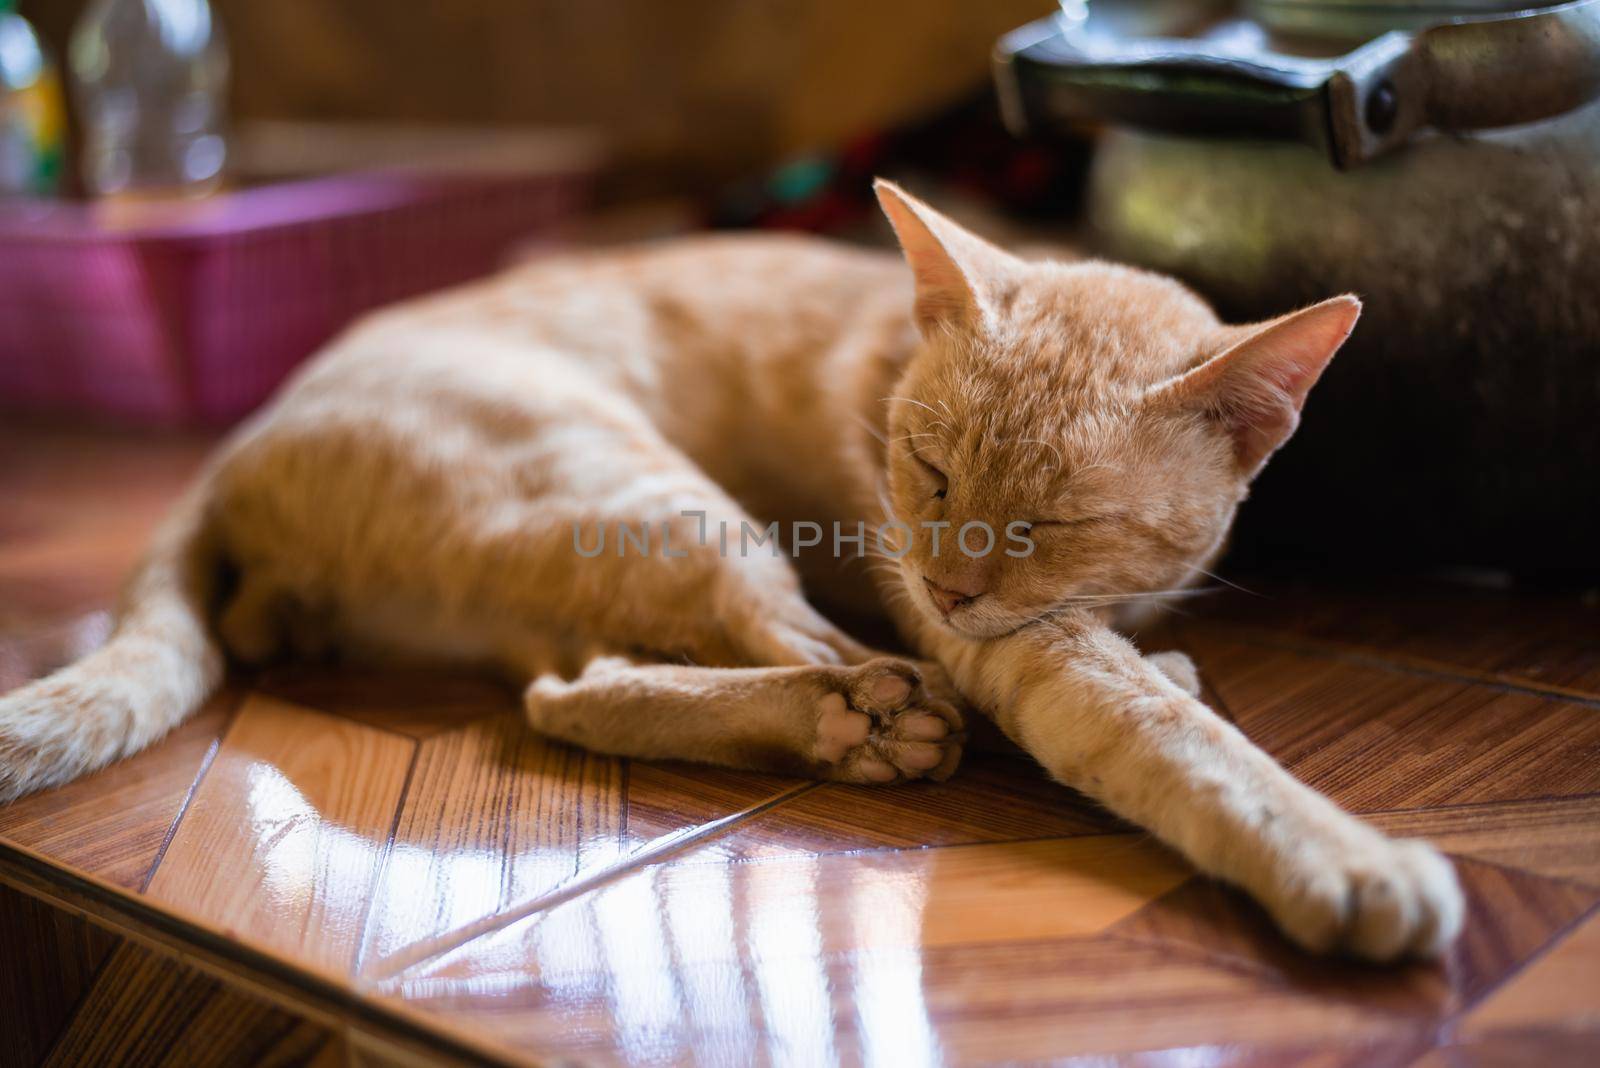 cat sleep on the table by Wmpix